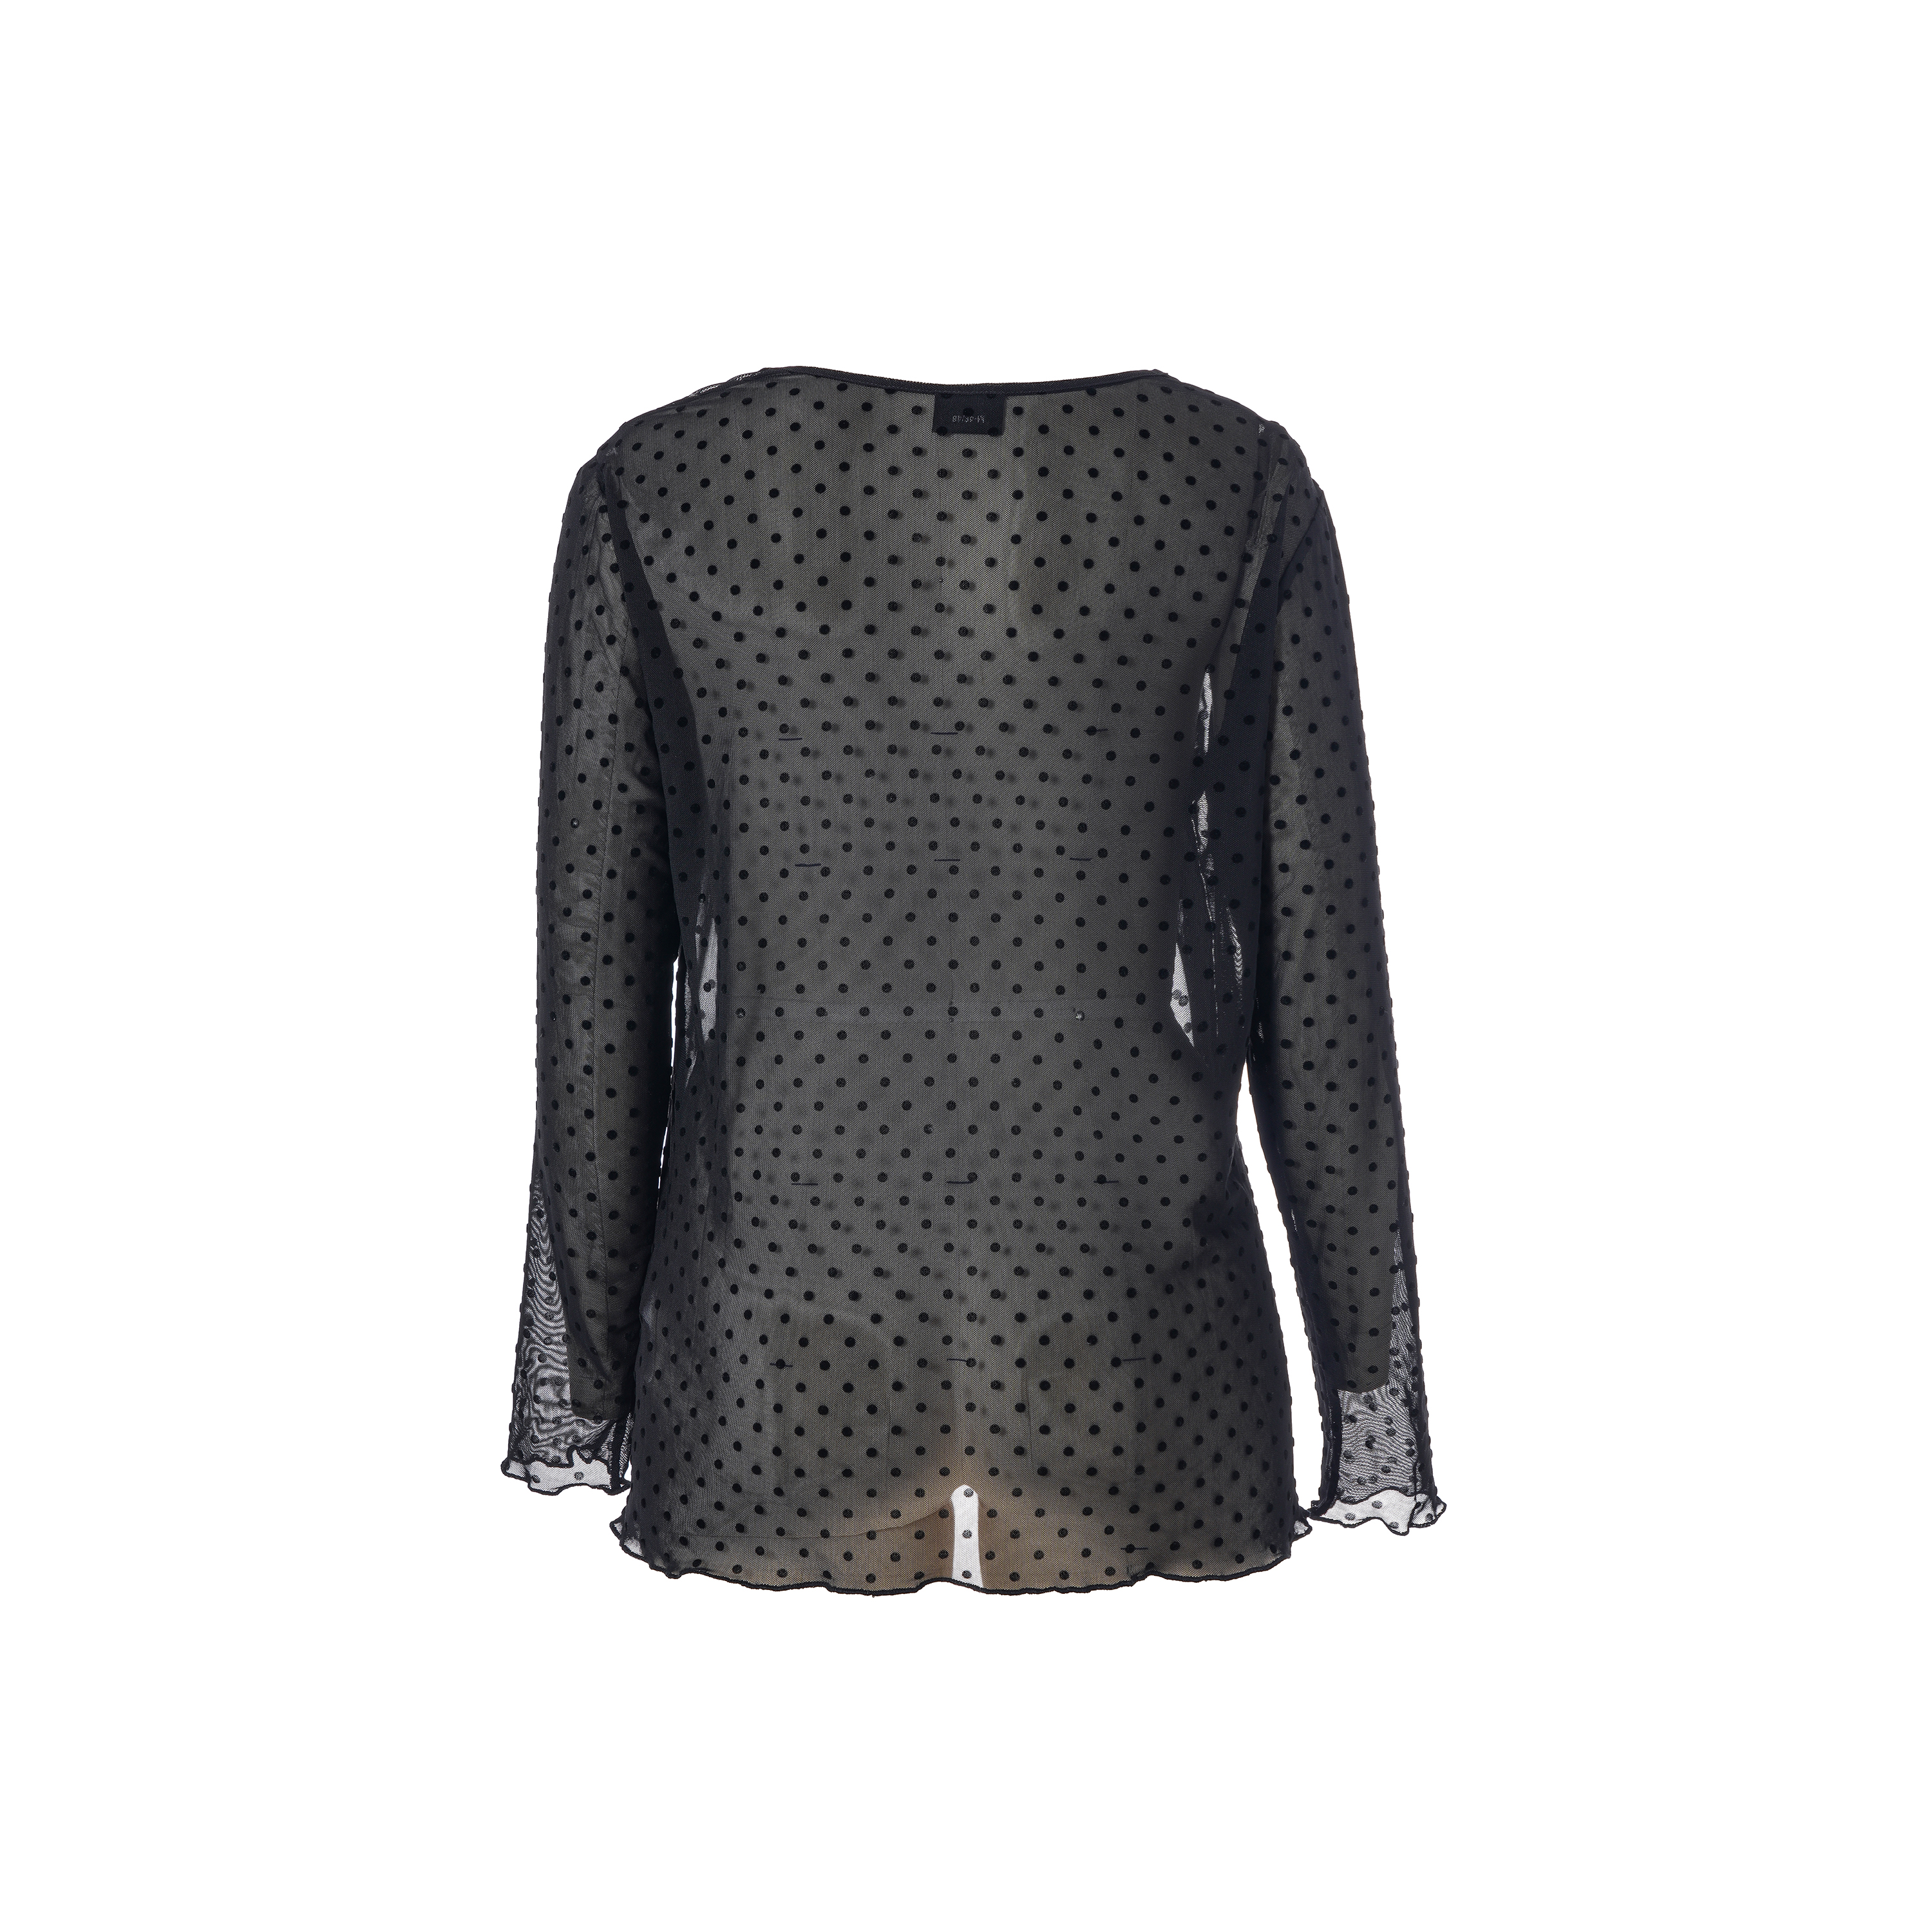 Gozzip Shirt Mesh transparent - by BiNA große Größen Curvy Mode